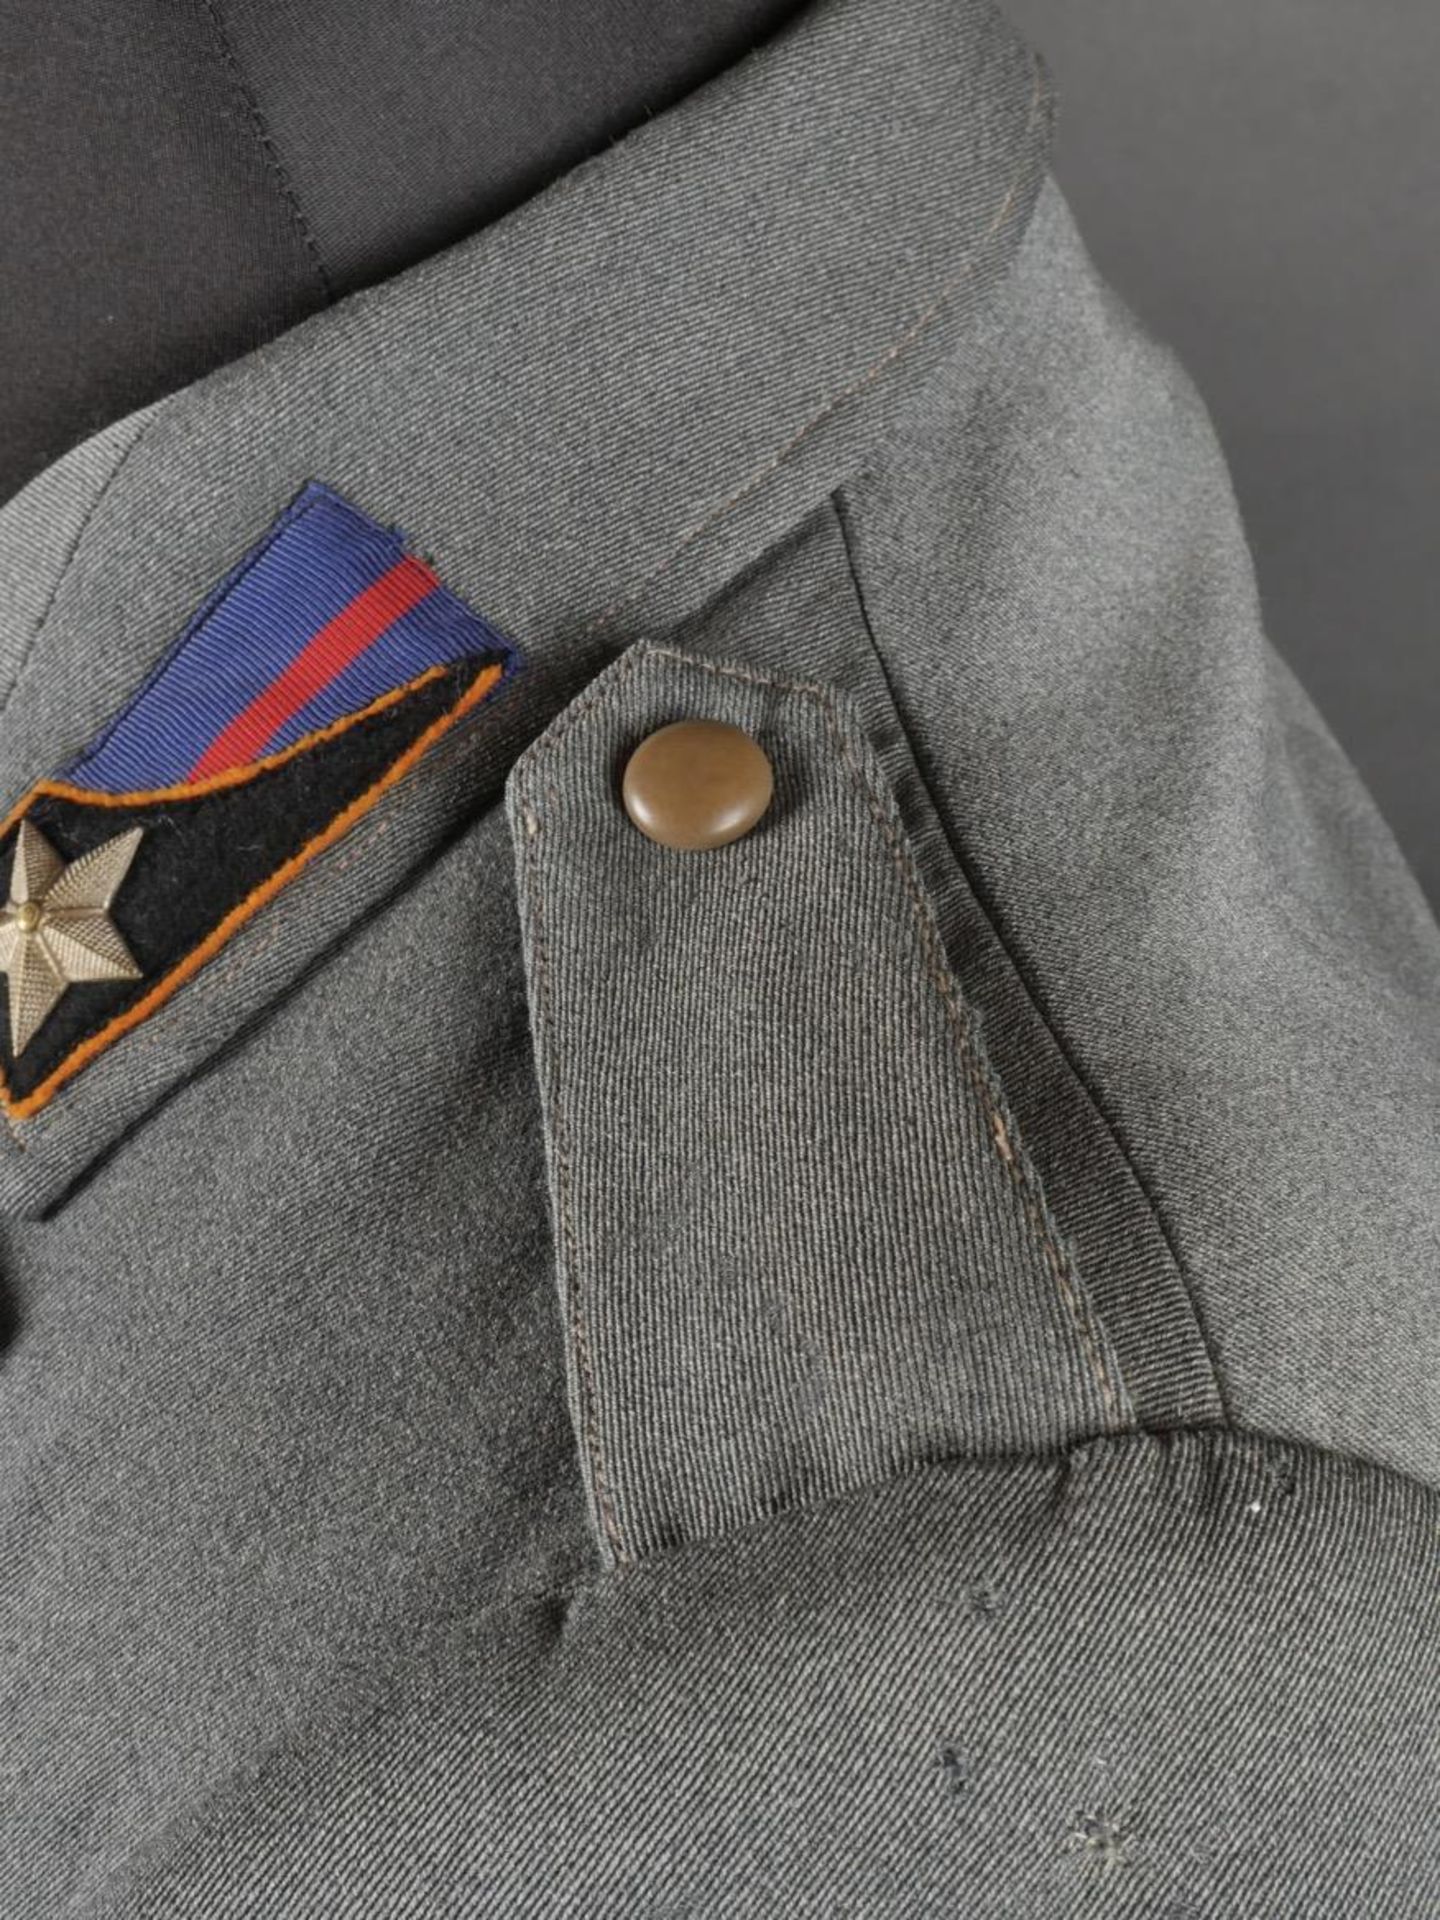 Vareuse de Carlo Boromi, colonel du Regiment Artillerie de la Division Bergamo. Jacket of Carlo Bo - Image 19 of 19